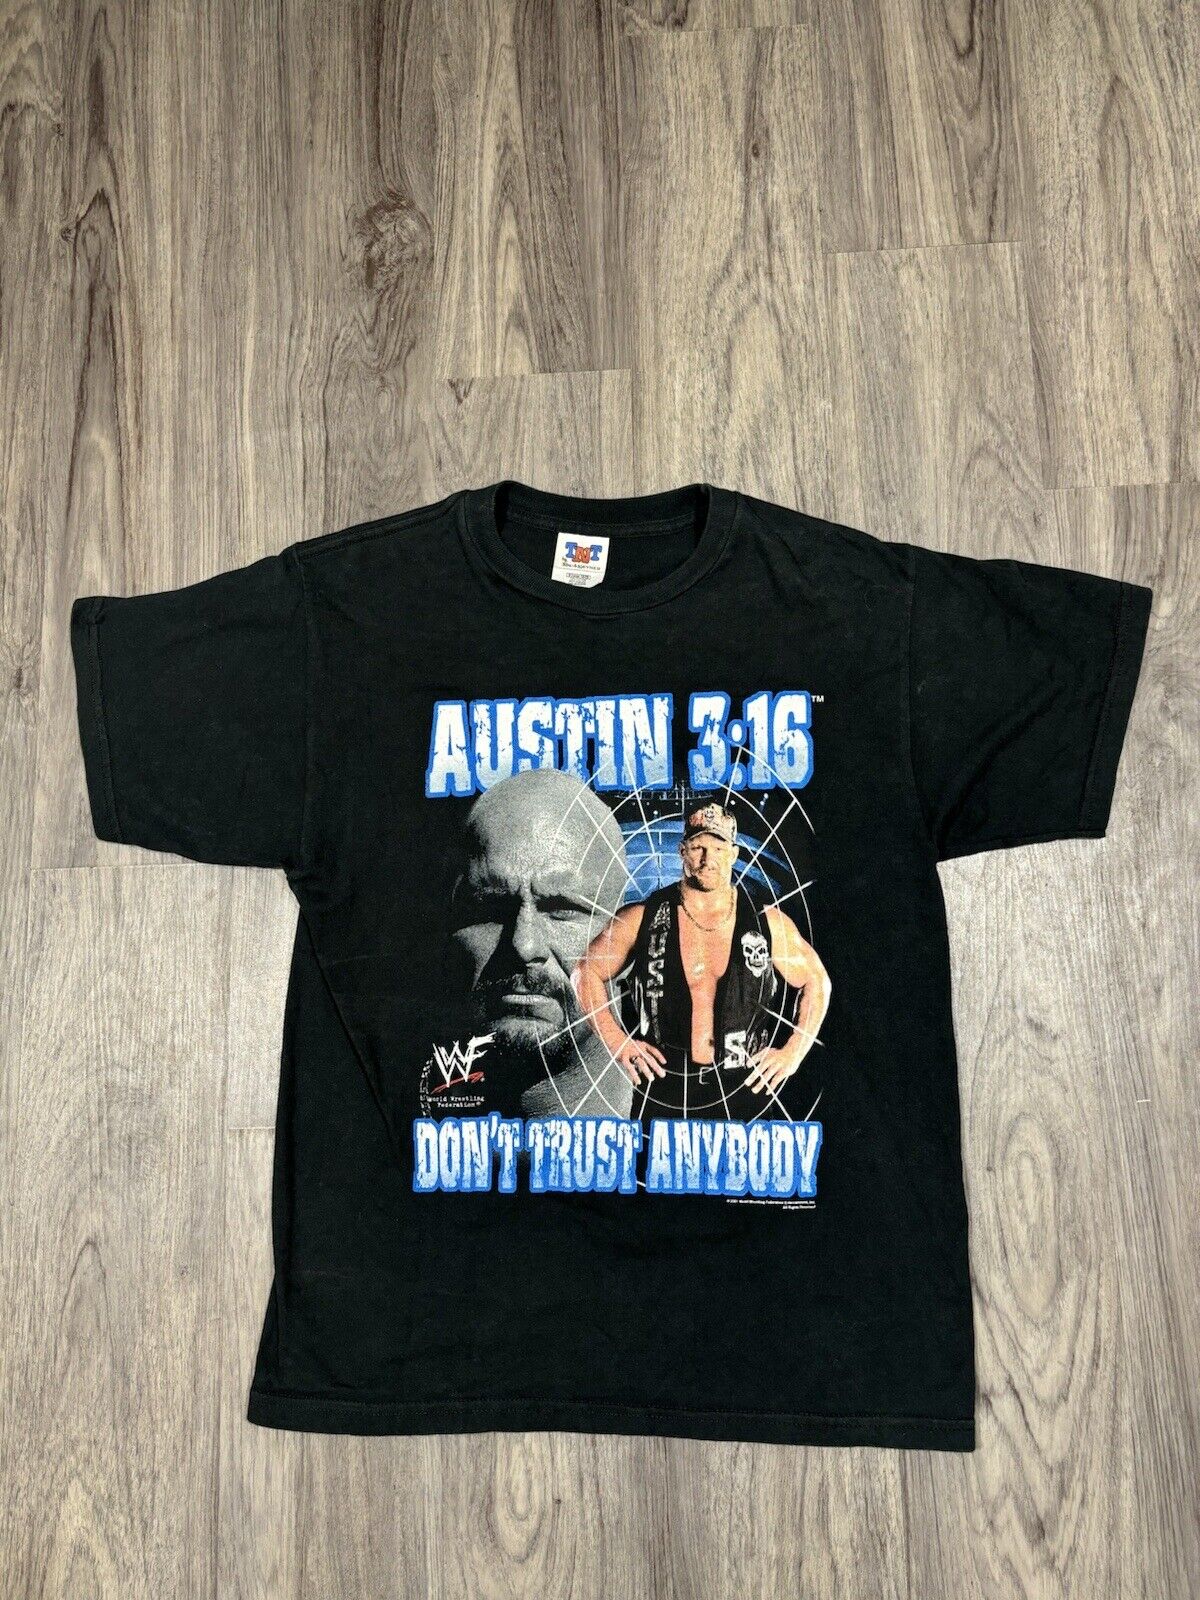 Stone Cold Steve Austin Dont Trust Anybody Vintage Shirt WWF 3:16 Youth XL 2001